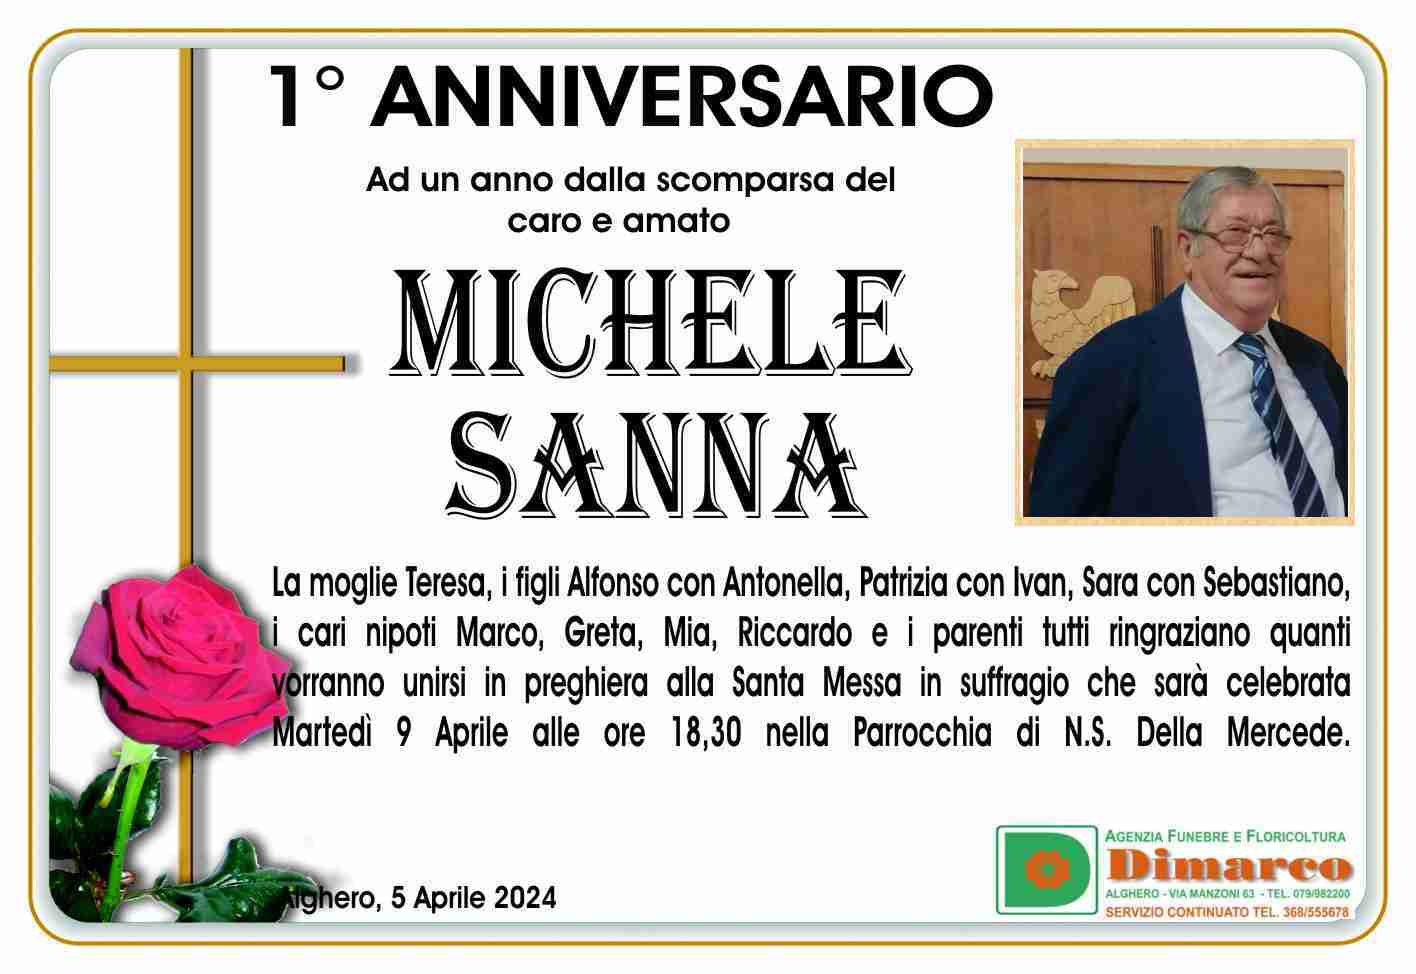 Michele Sanna